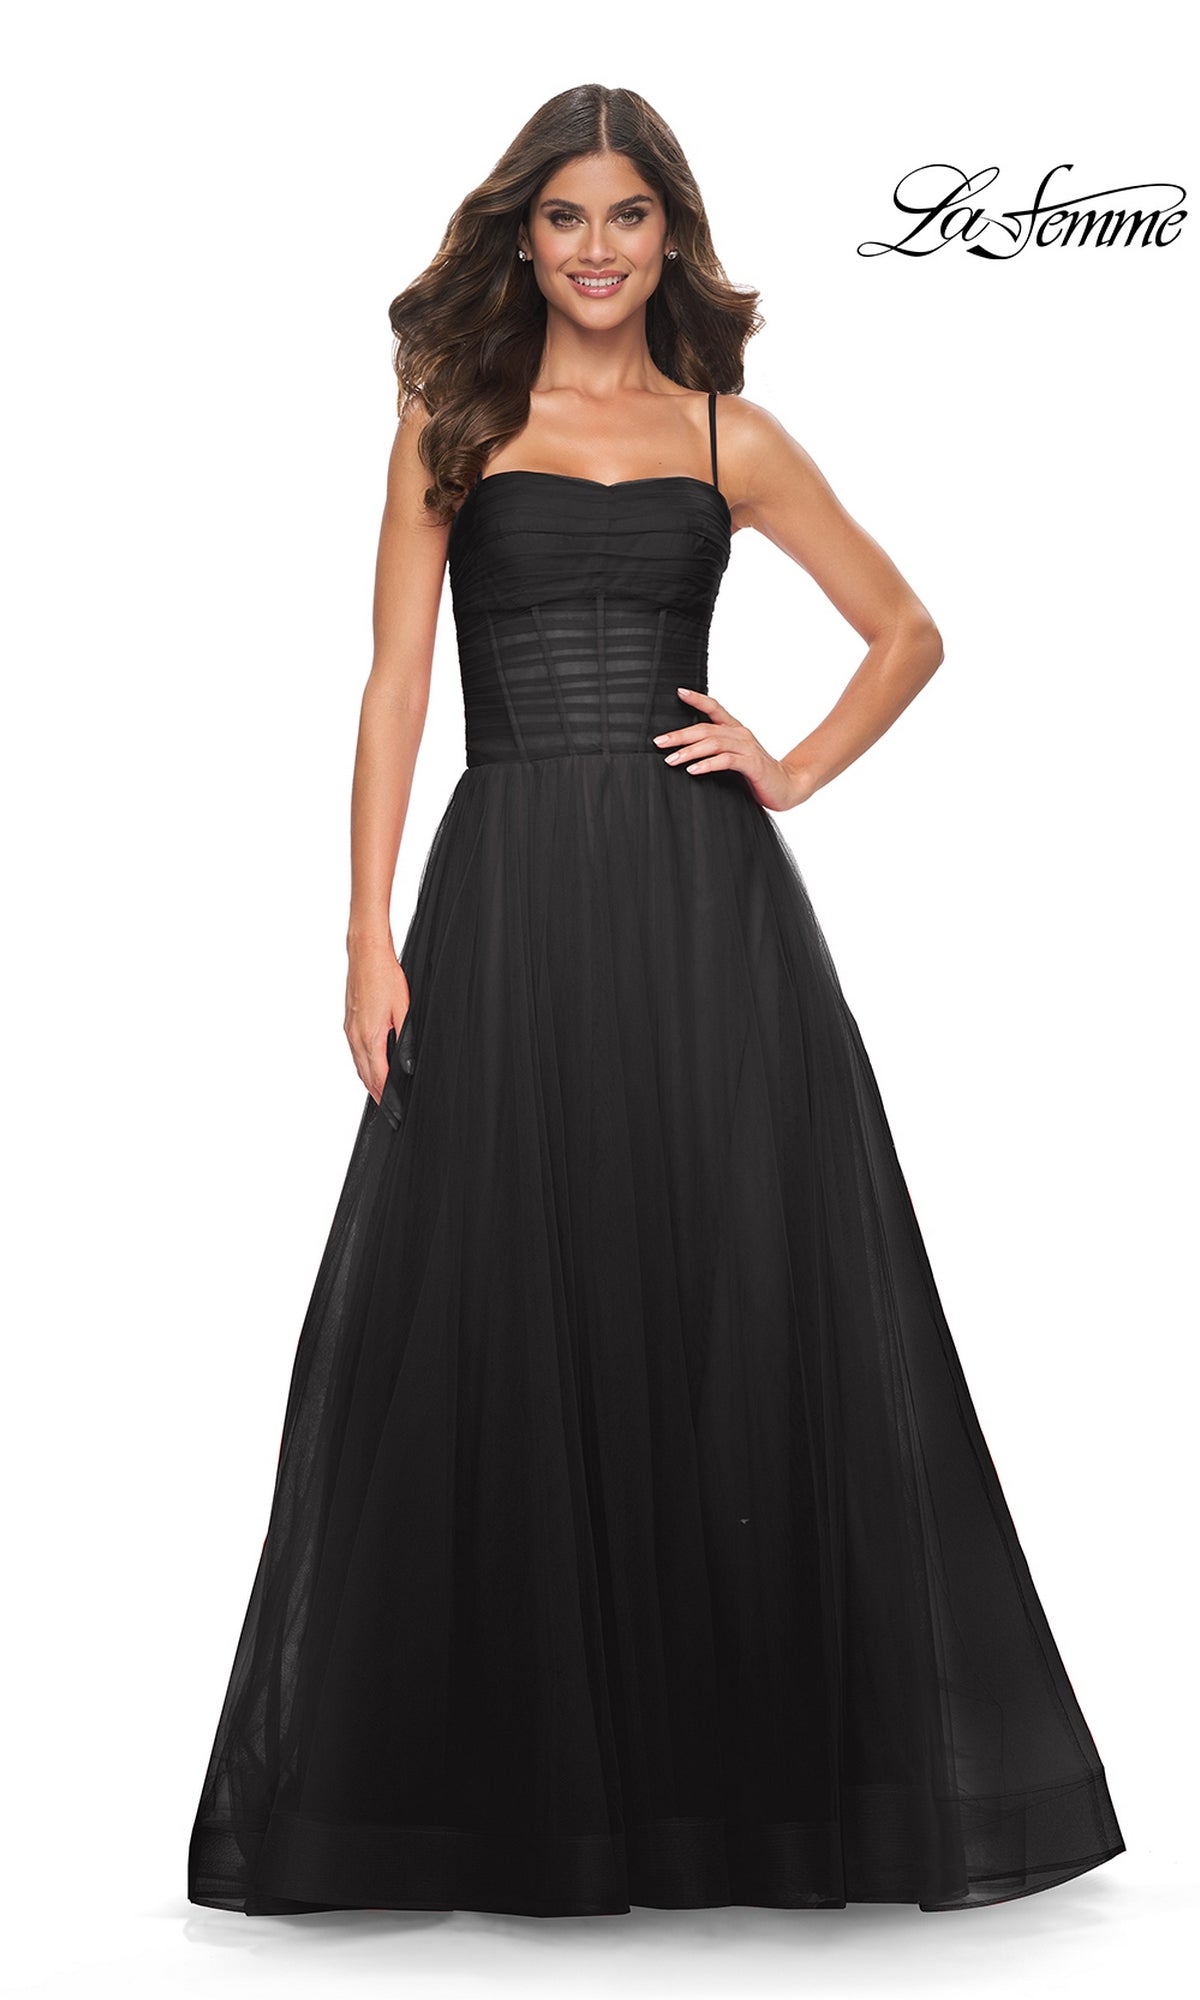  La Femme 32017 Formal Prom Dress